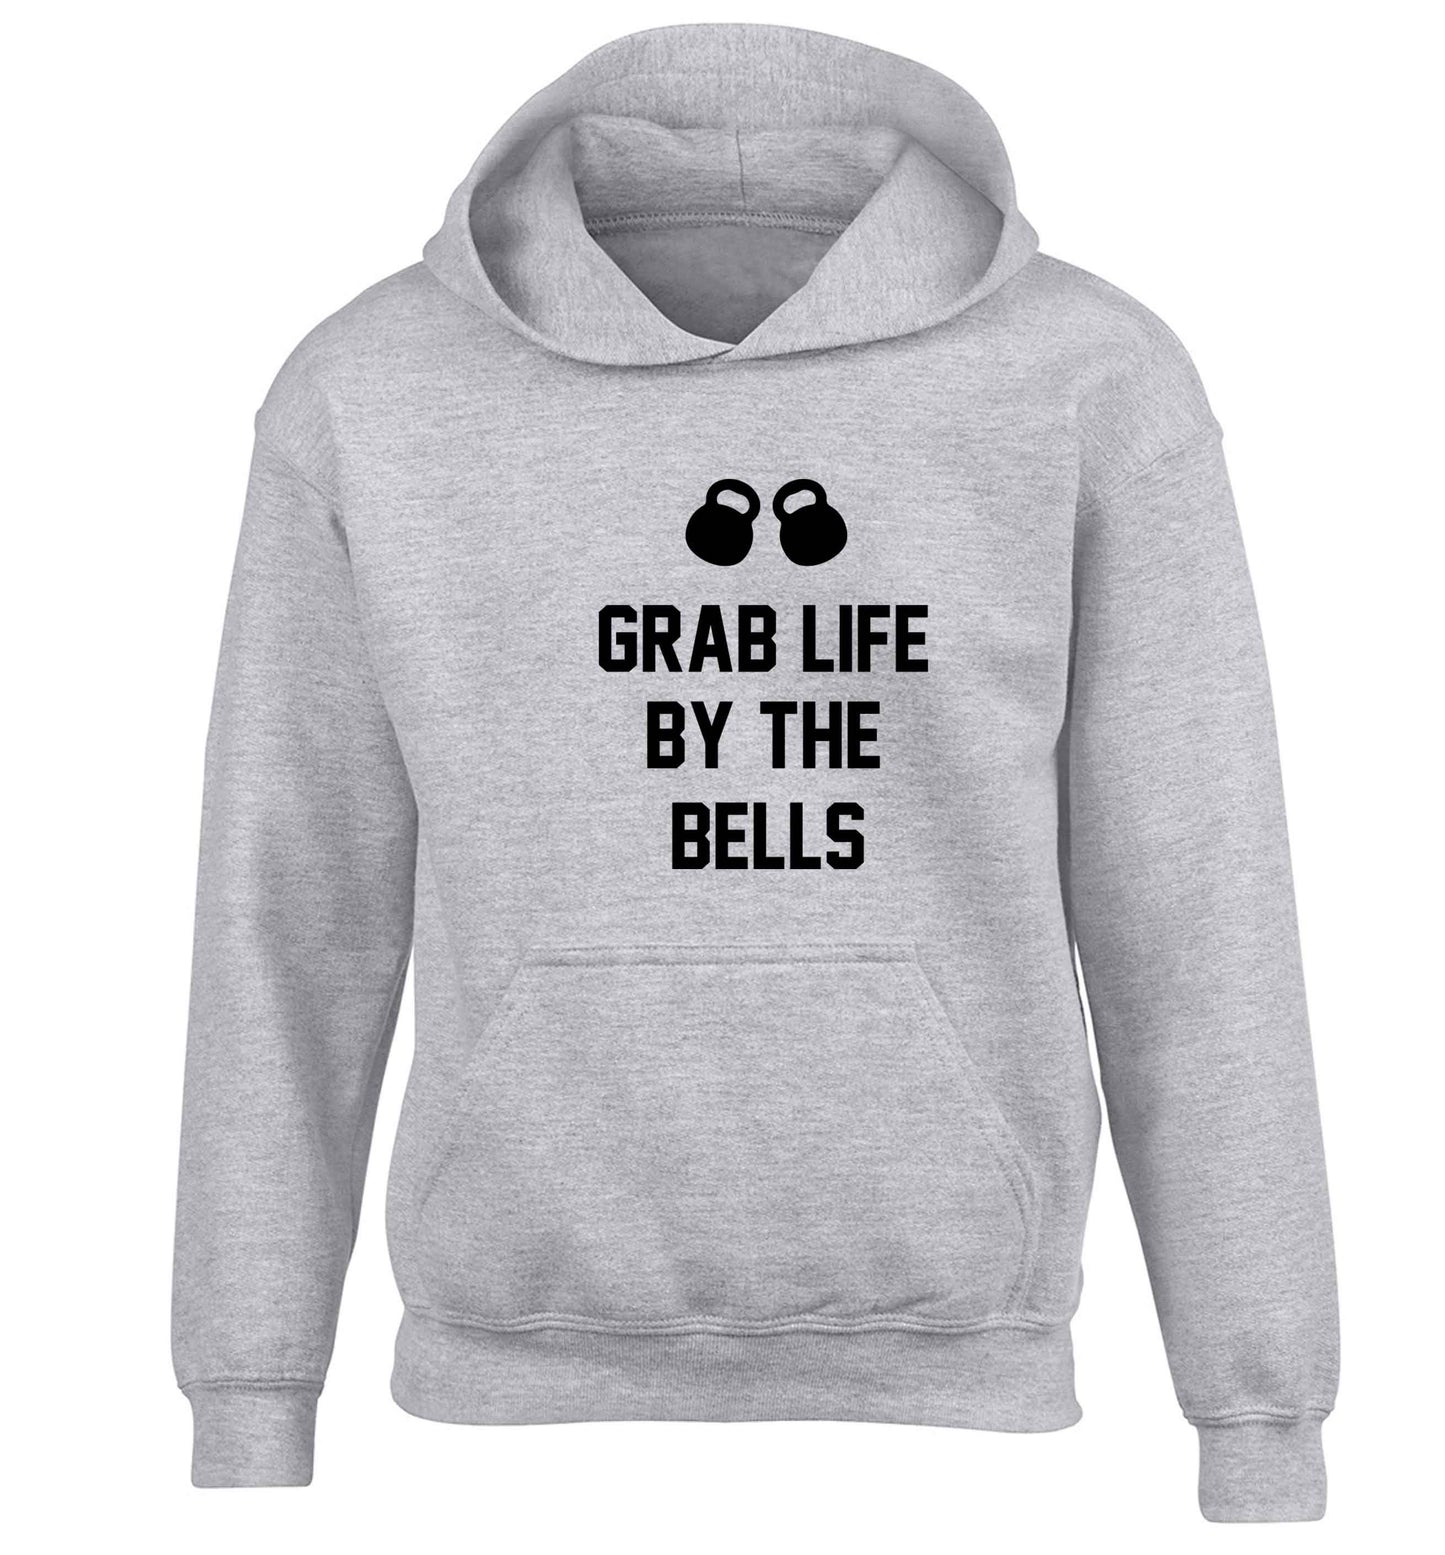 Grab life by the bells children's grey hoodie 12-13 Years